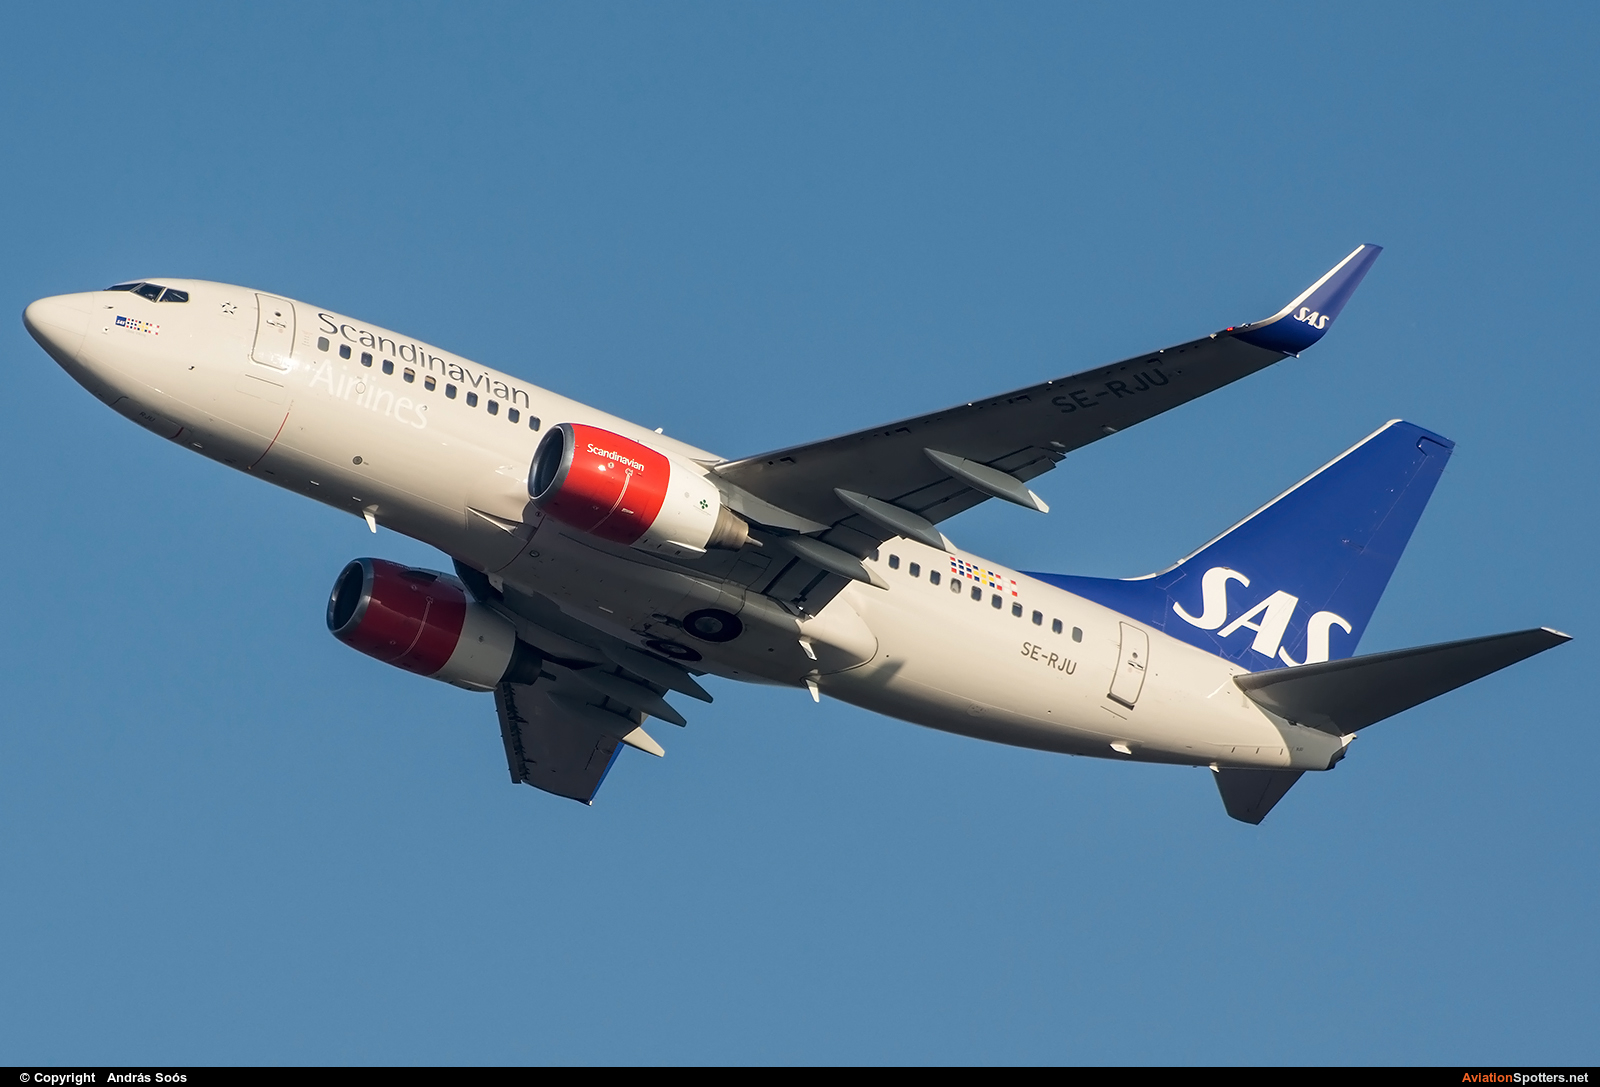 SAS - Scandinavian Airlines  -  737-700  (SE-RJU) By András Soós (sas1965)